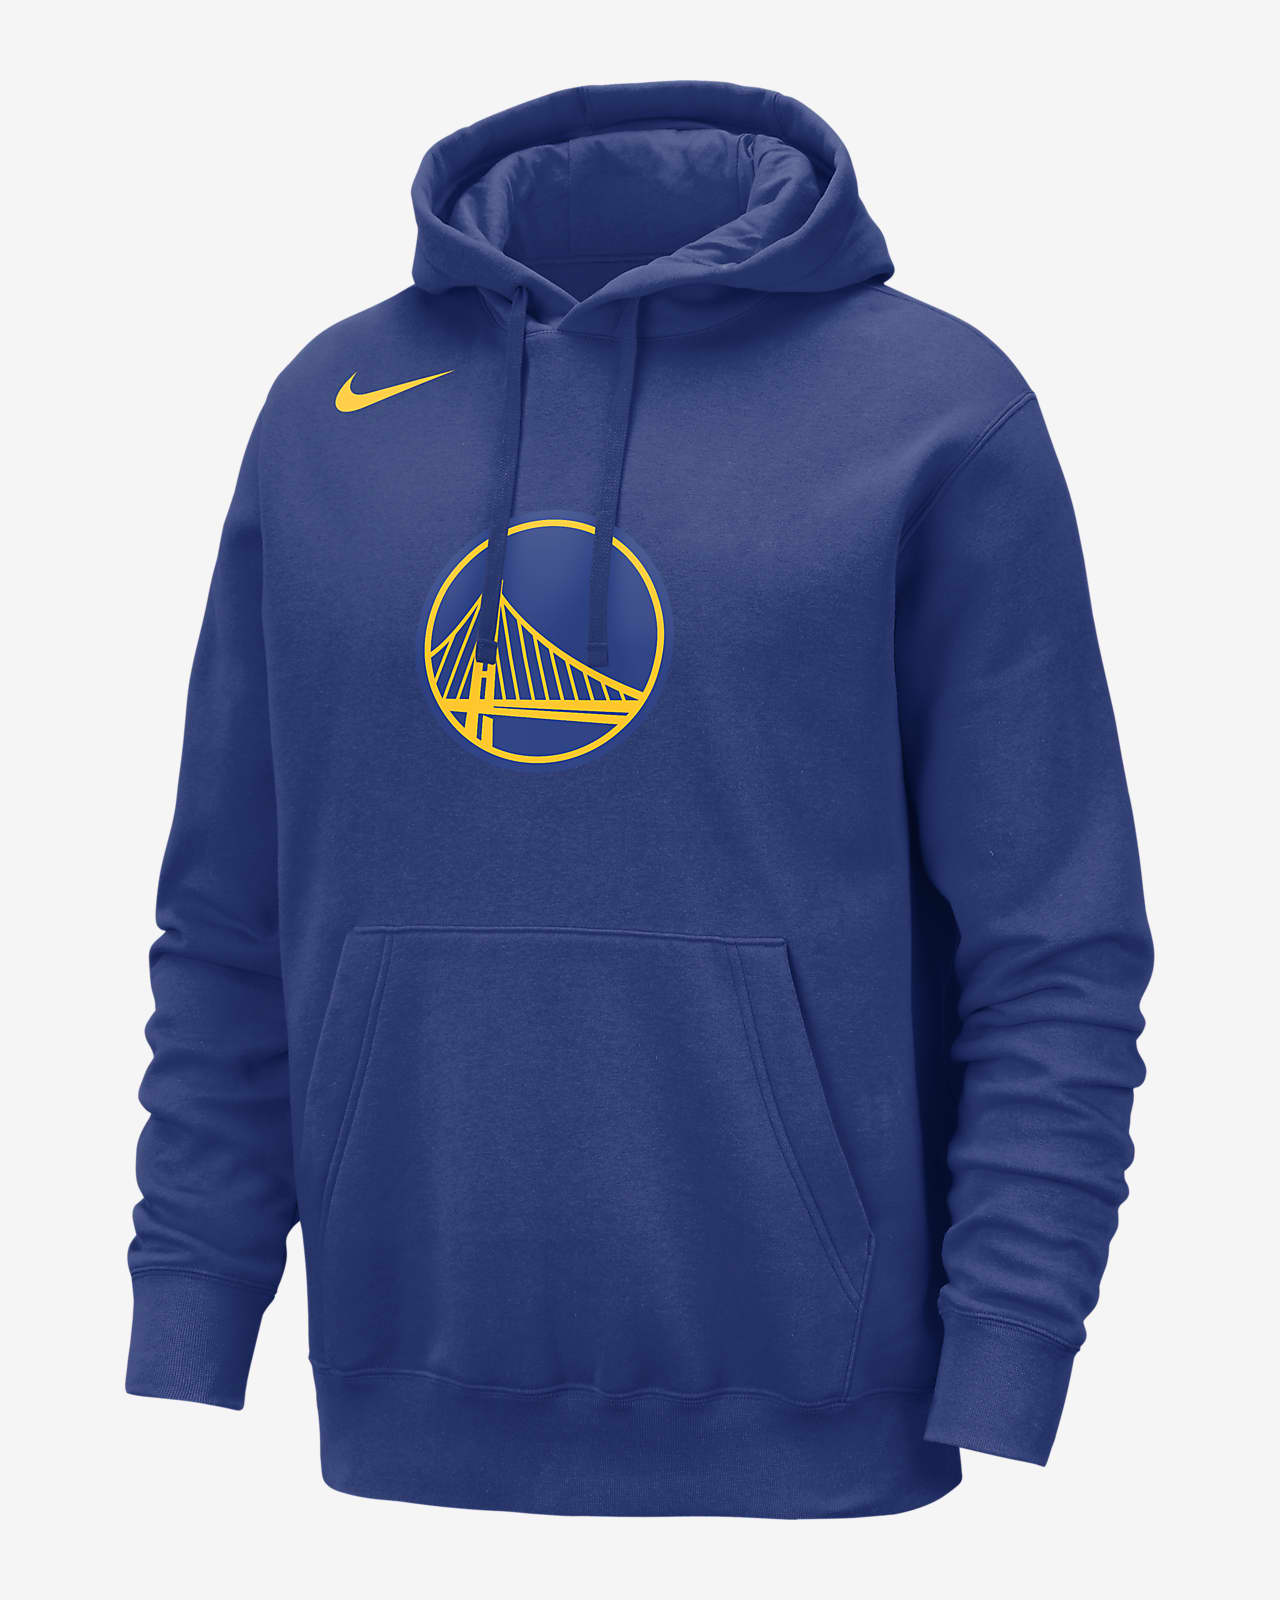 Pánská mikina Nike NBA Golden State Warriors Club s kapucí